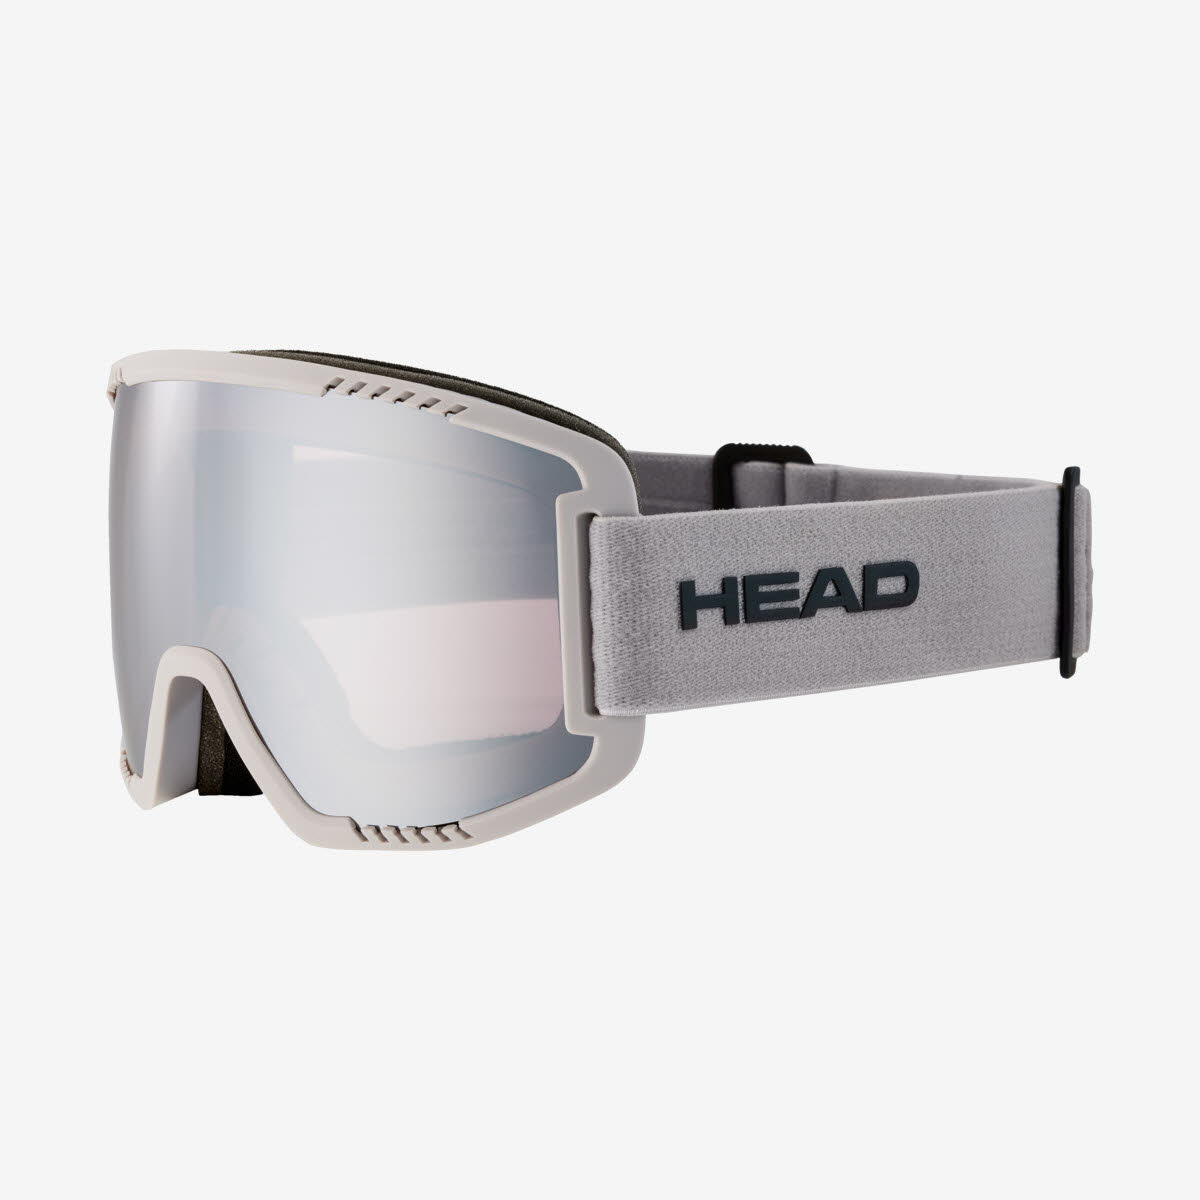 HEAD Contex Pro 5k Skibrille laminiertes Doppelglas grau